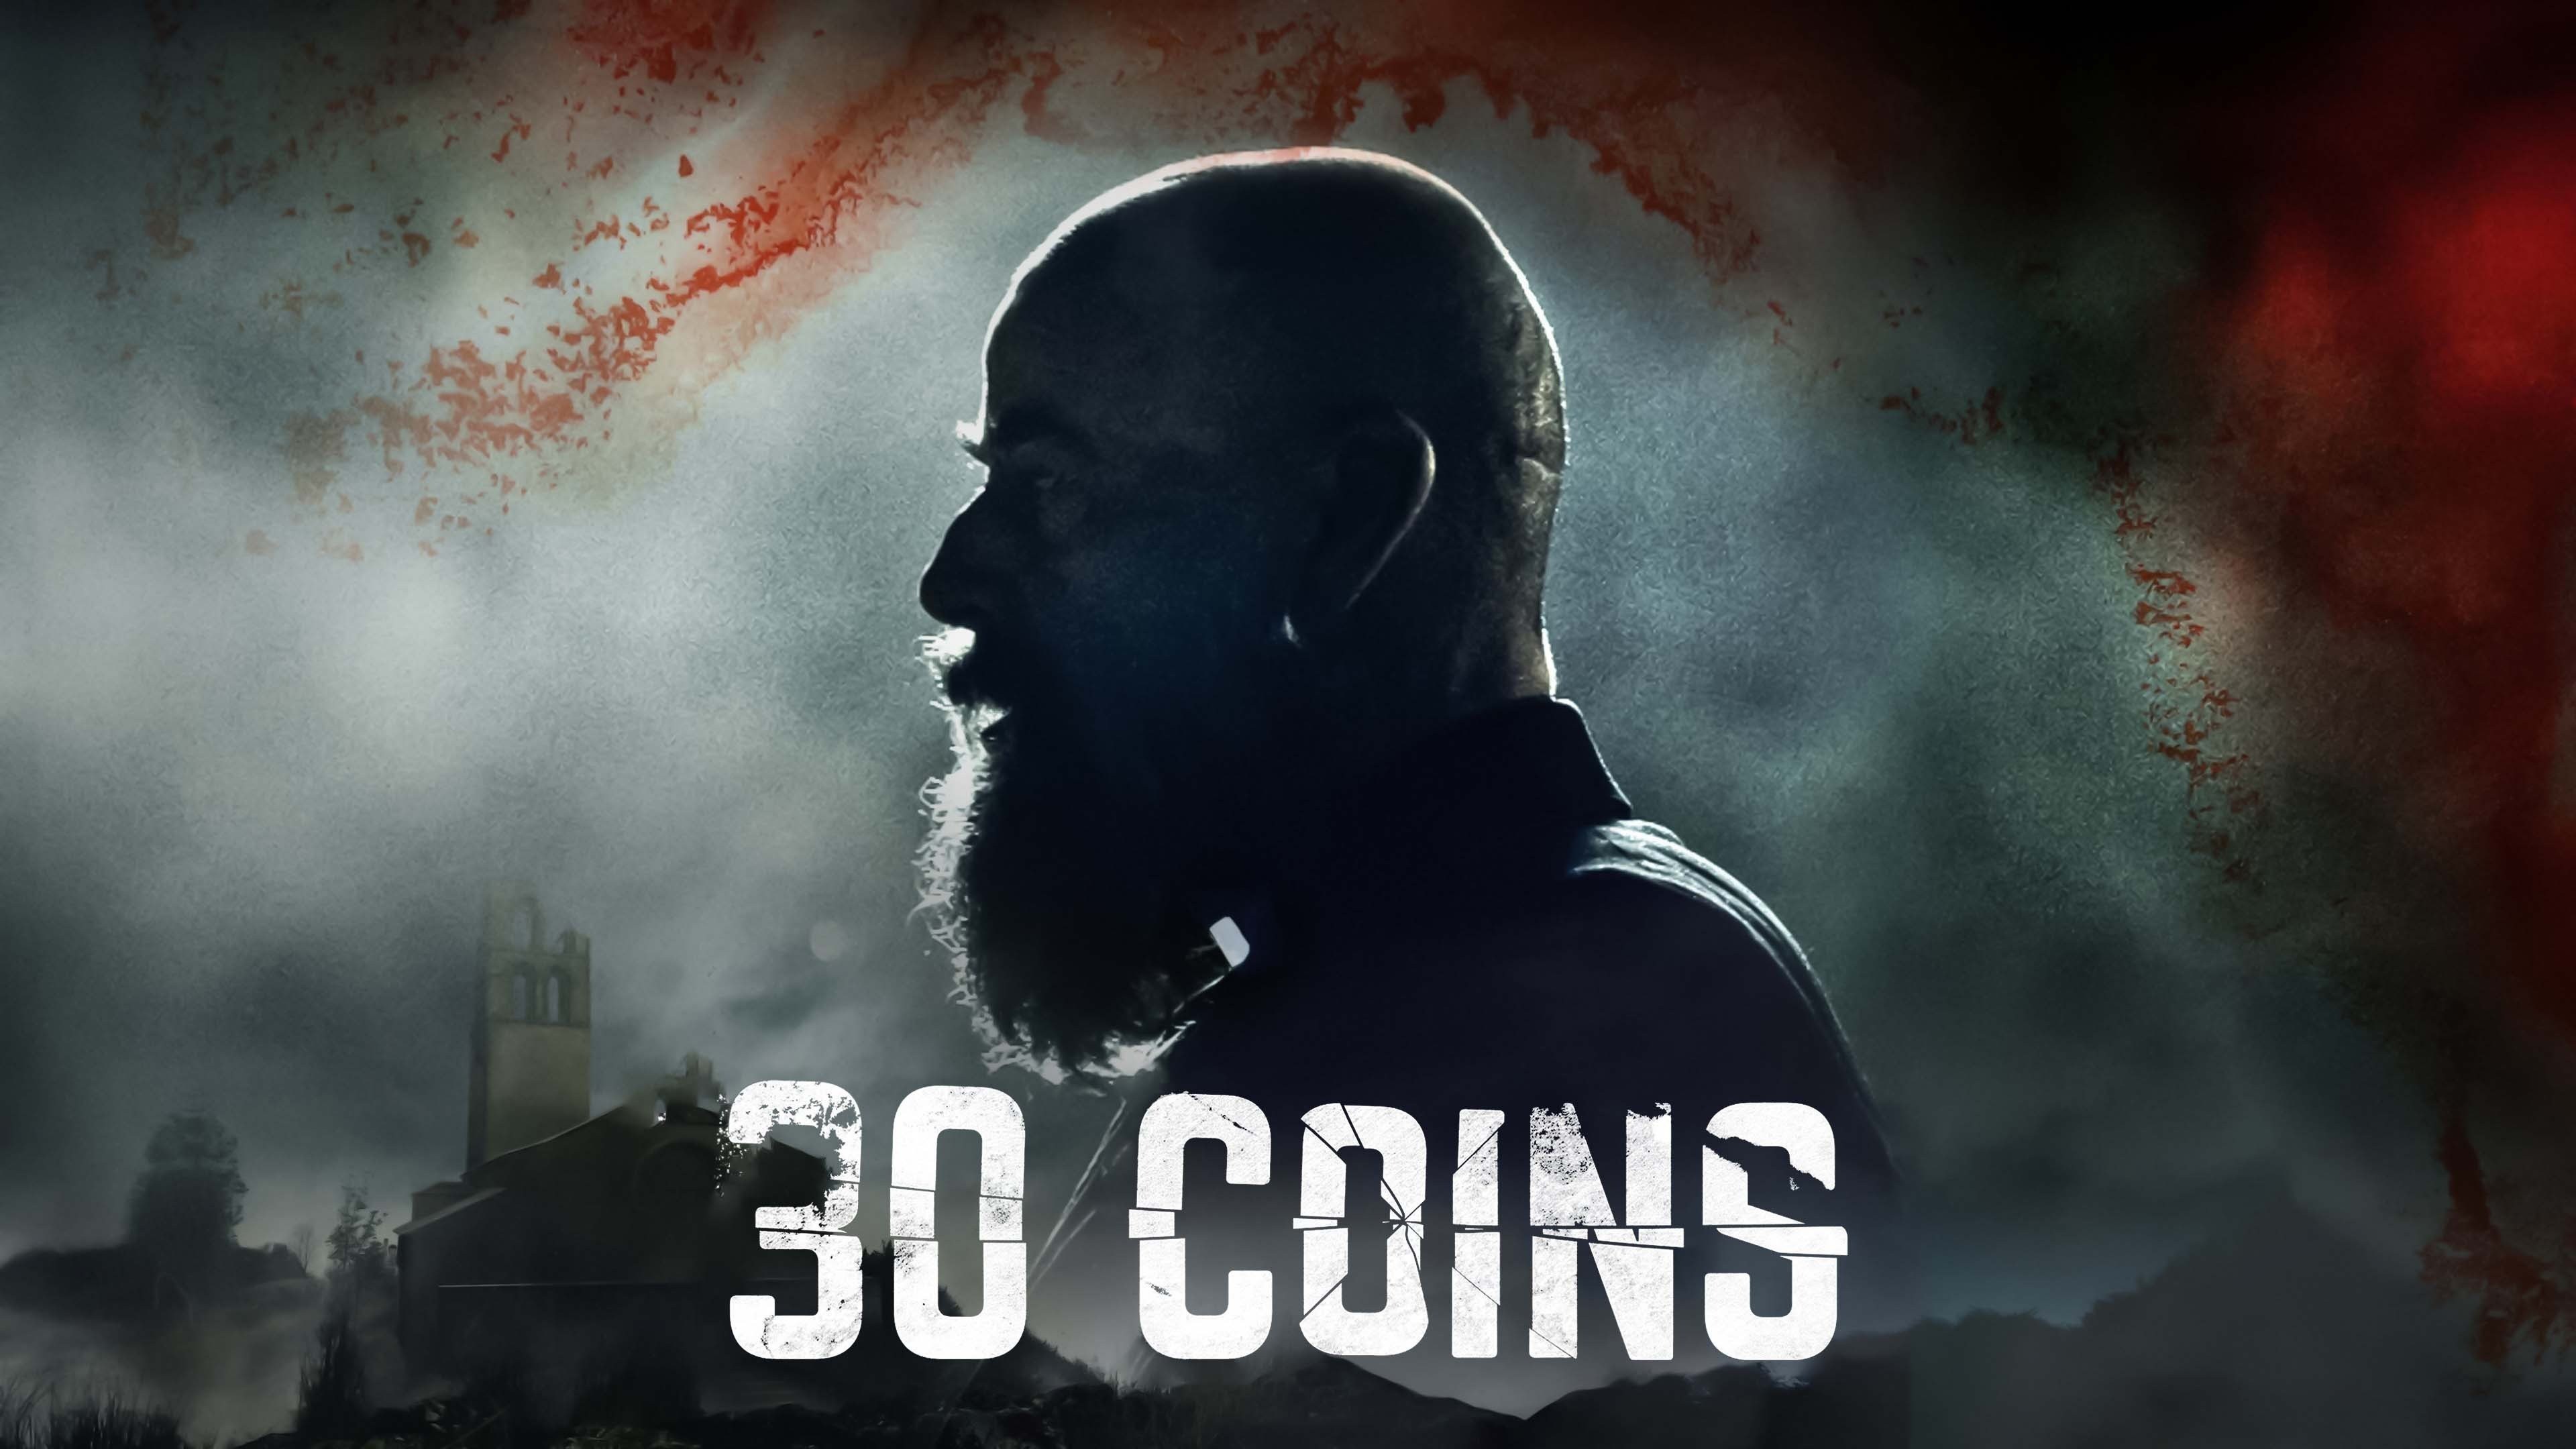 30 Coins (30 Monedas) Season 1, Official Website for the HBO Series